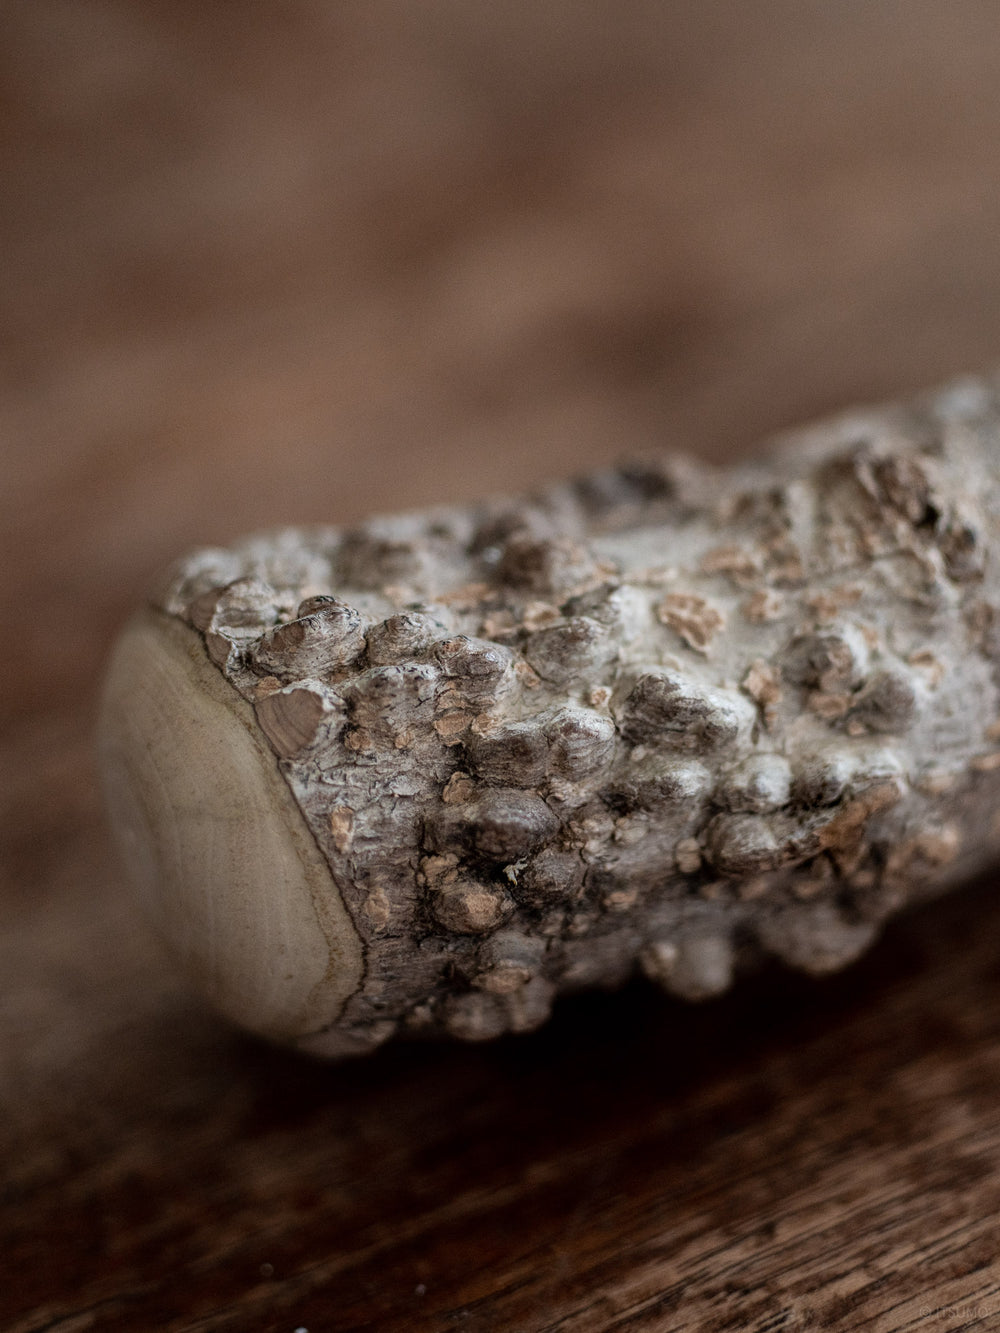 Azmaya sansho wood pestle with close up of the natural rough texture and character of Sansho trees